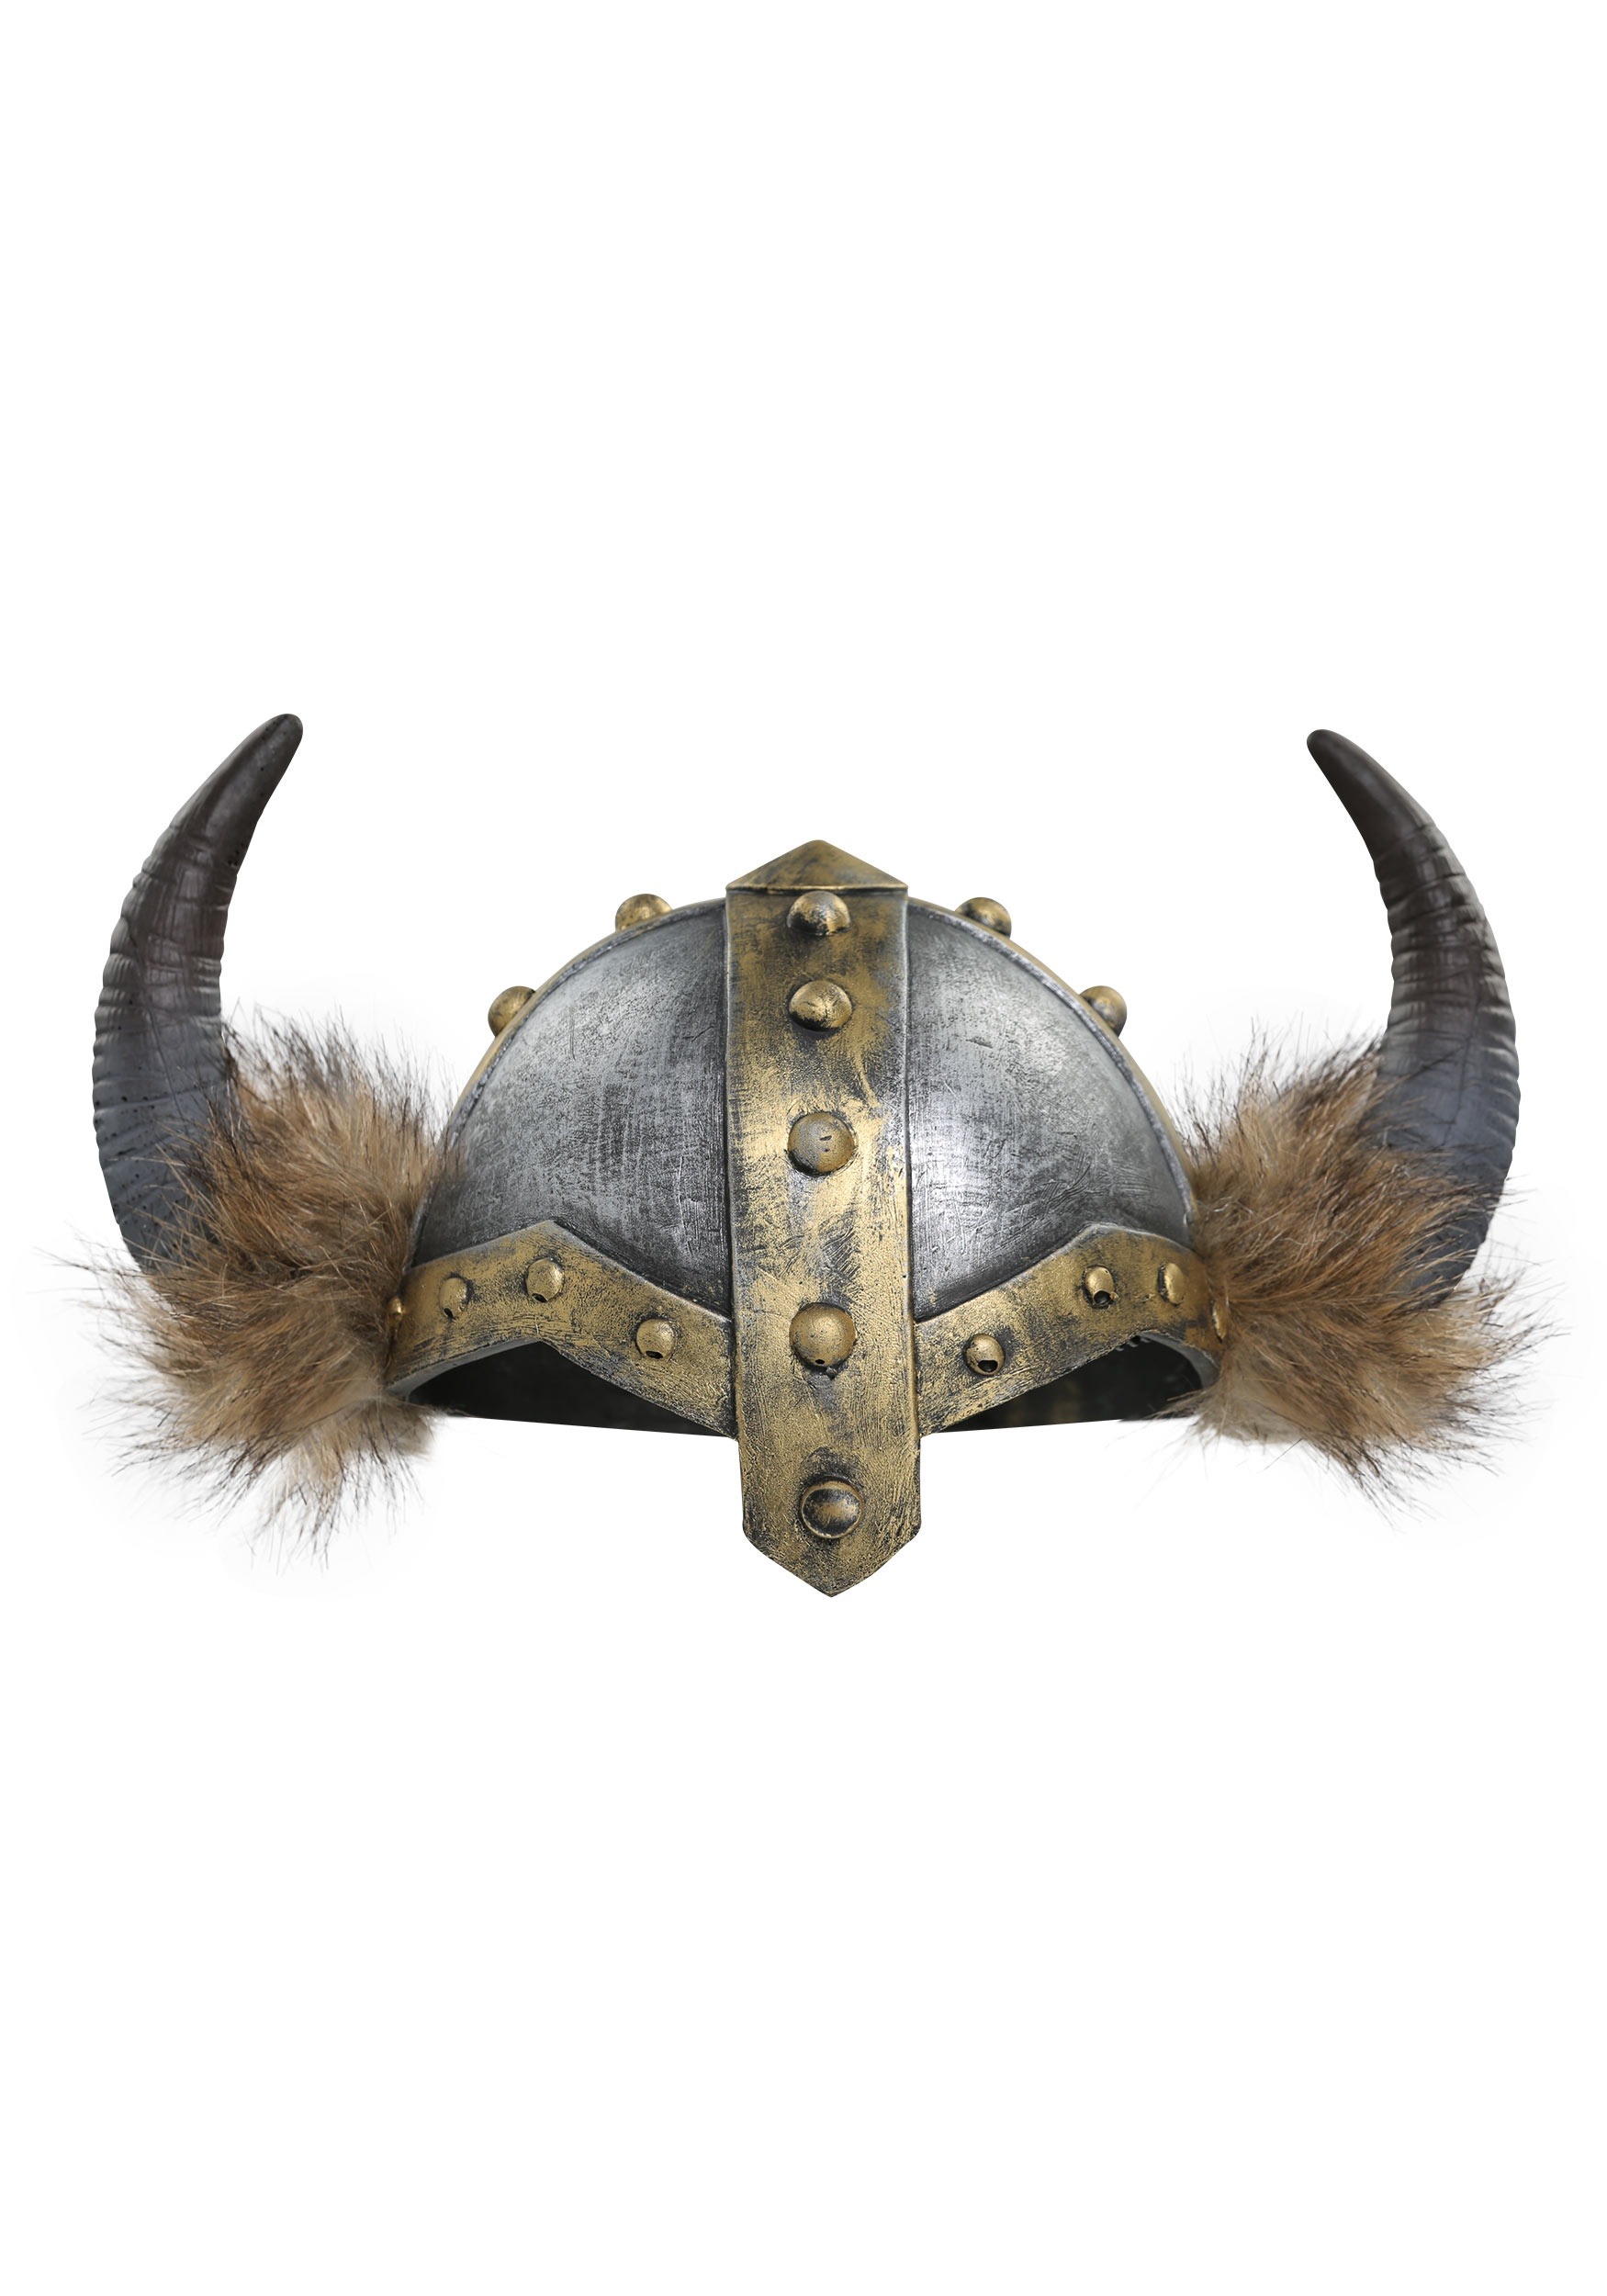 cartoon viking helmet with horns